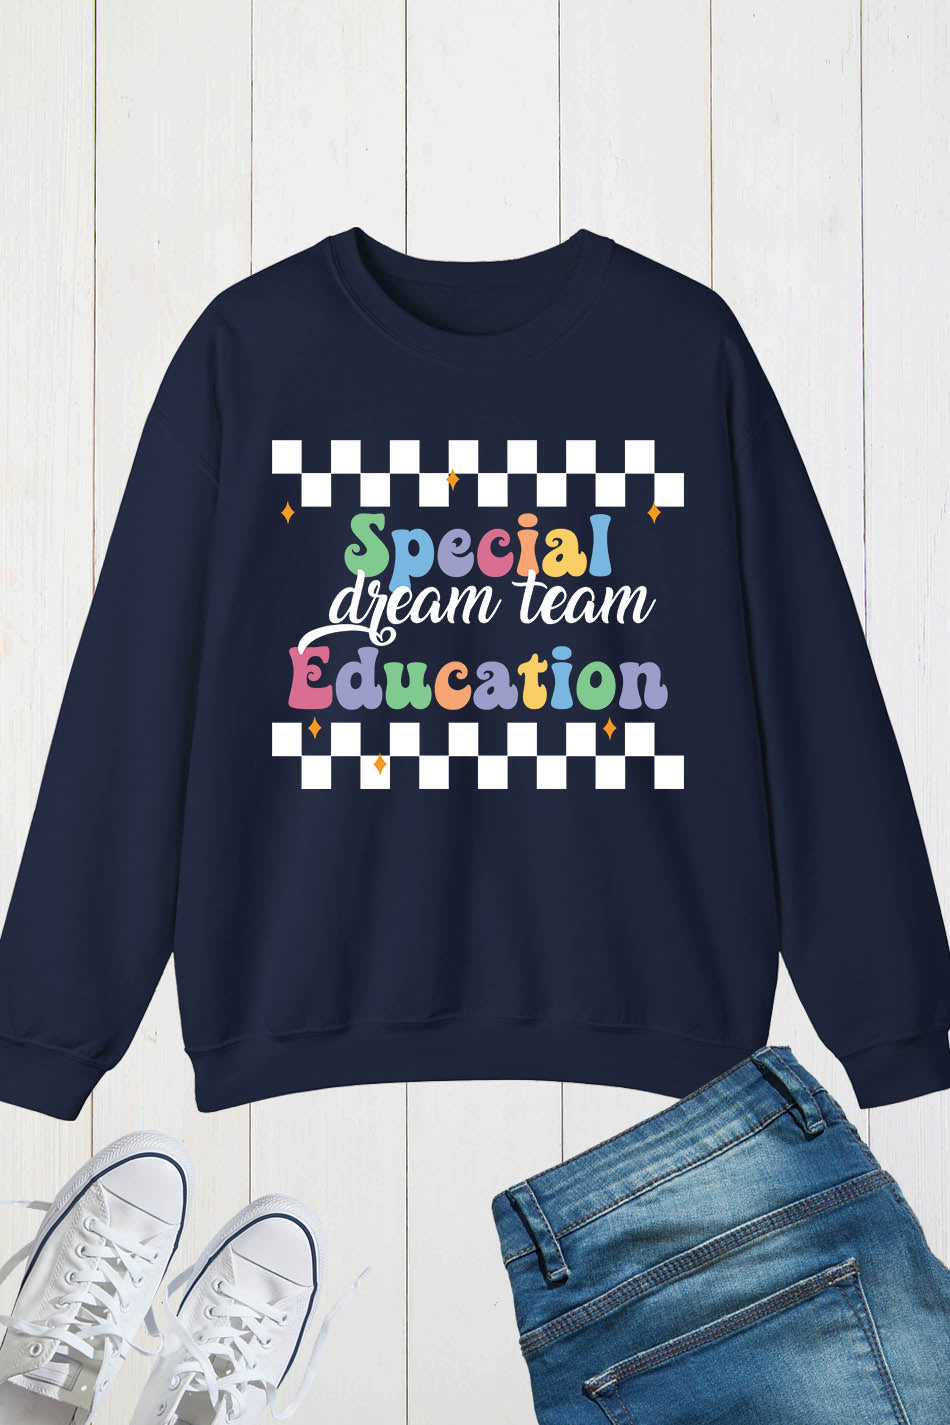 Special Education Dream Team Sweatshirt